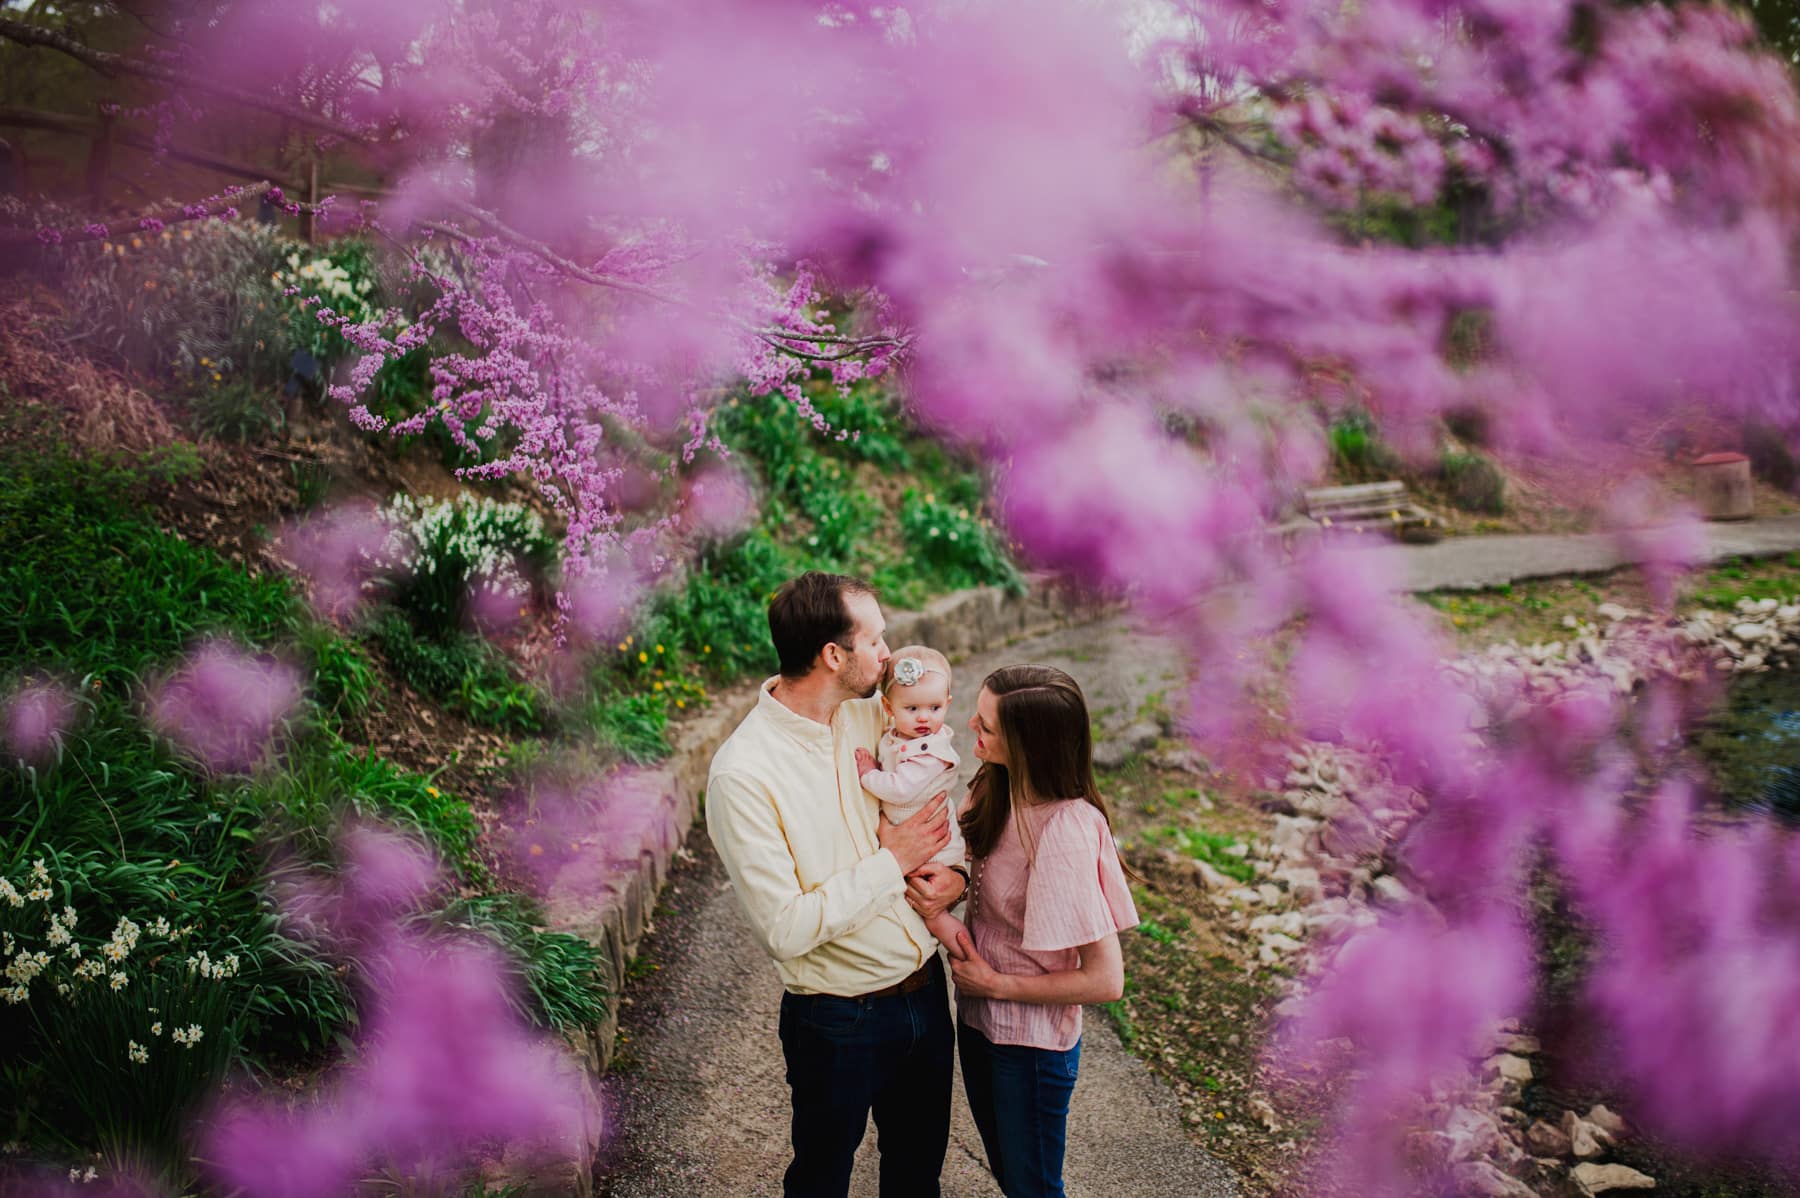 dad kisses baby on head under purple tree at coonskin park in charleston wv